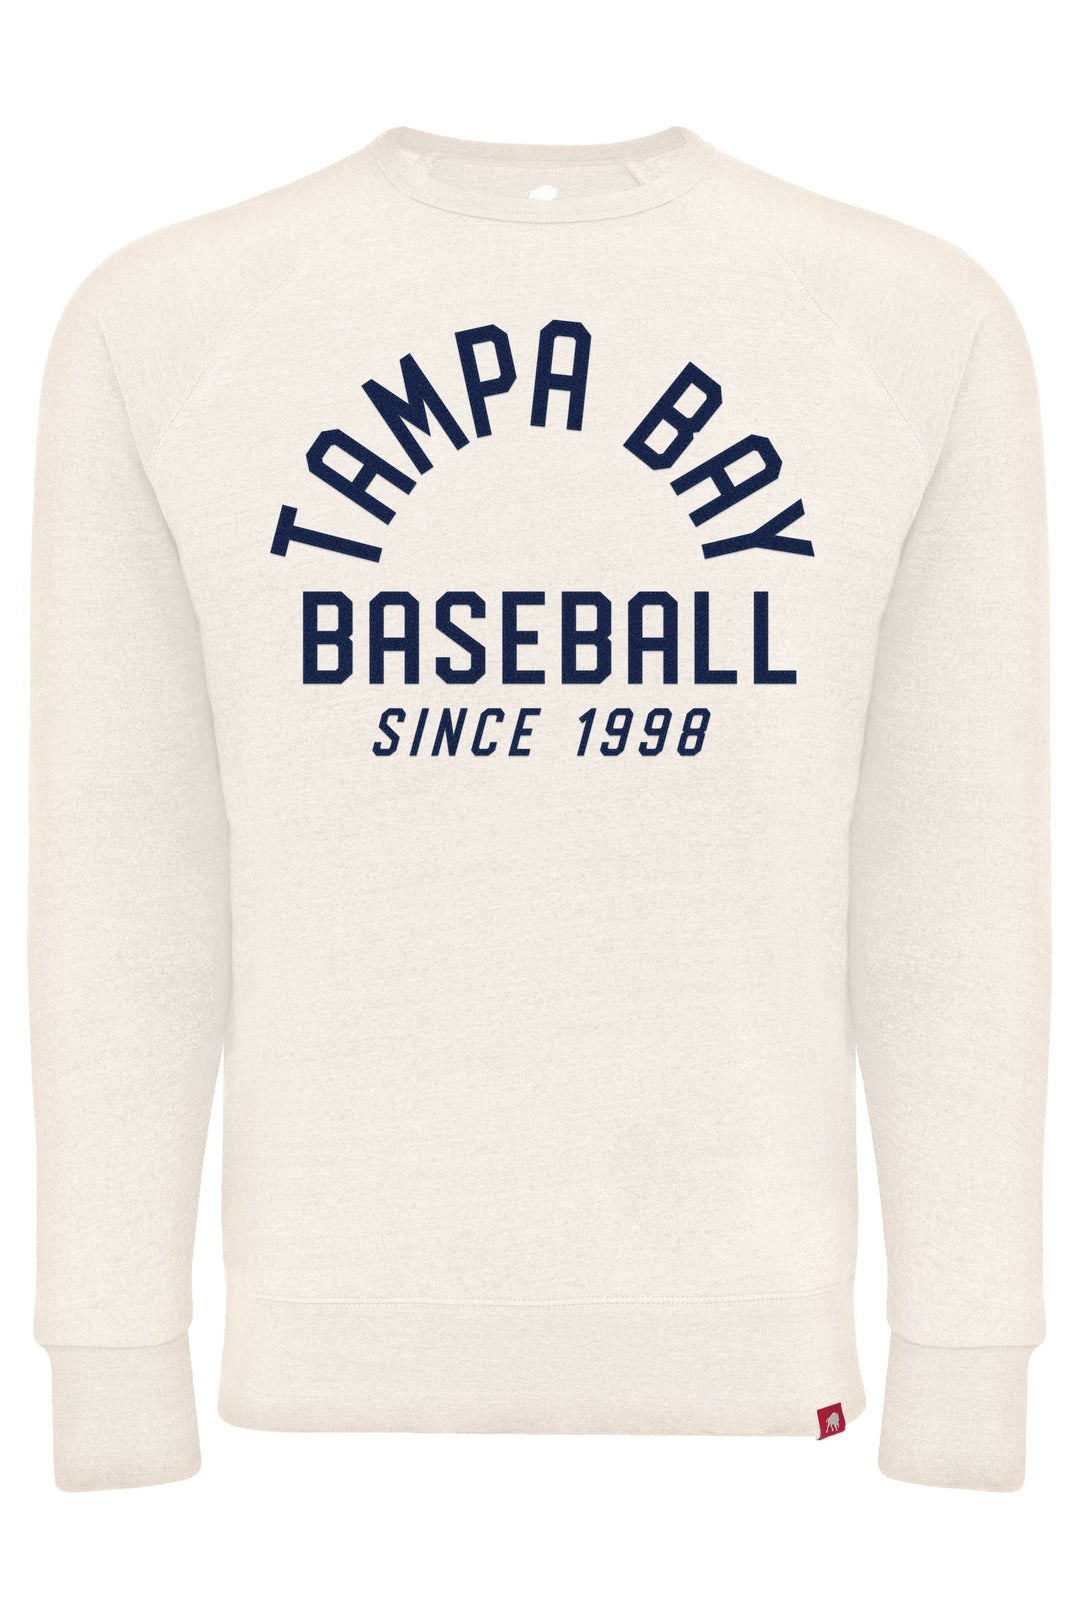 WHITE TAMPA BAY BASEBALL SINCE 1998 SPORTIQE CREW SWEATSHIRT - The Bay Republic | Team Store of the Tampa Bay Rays & Rowdies